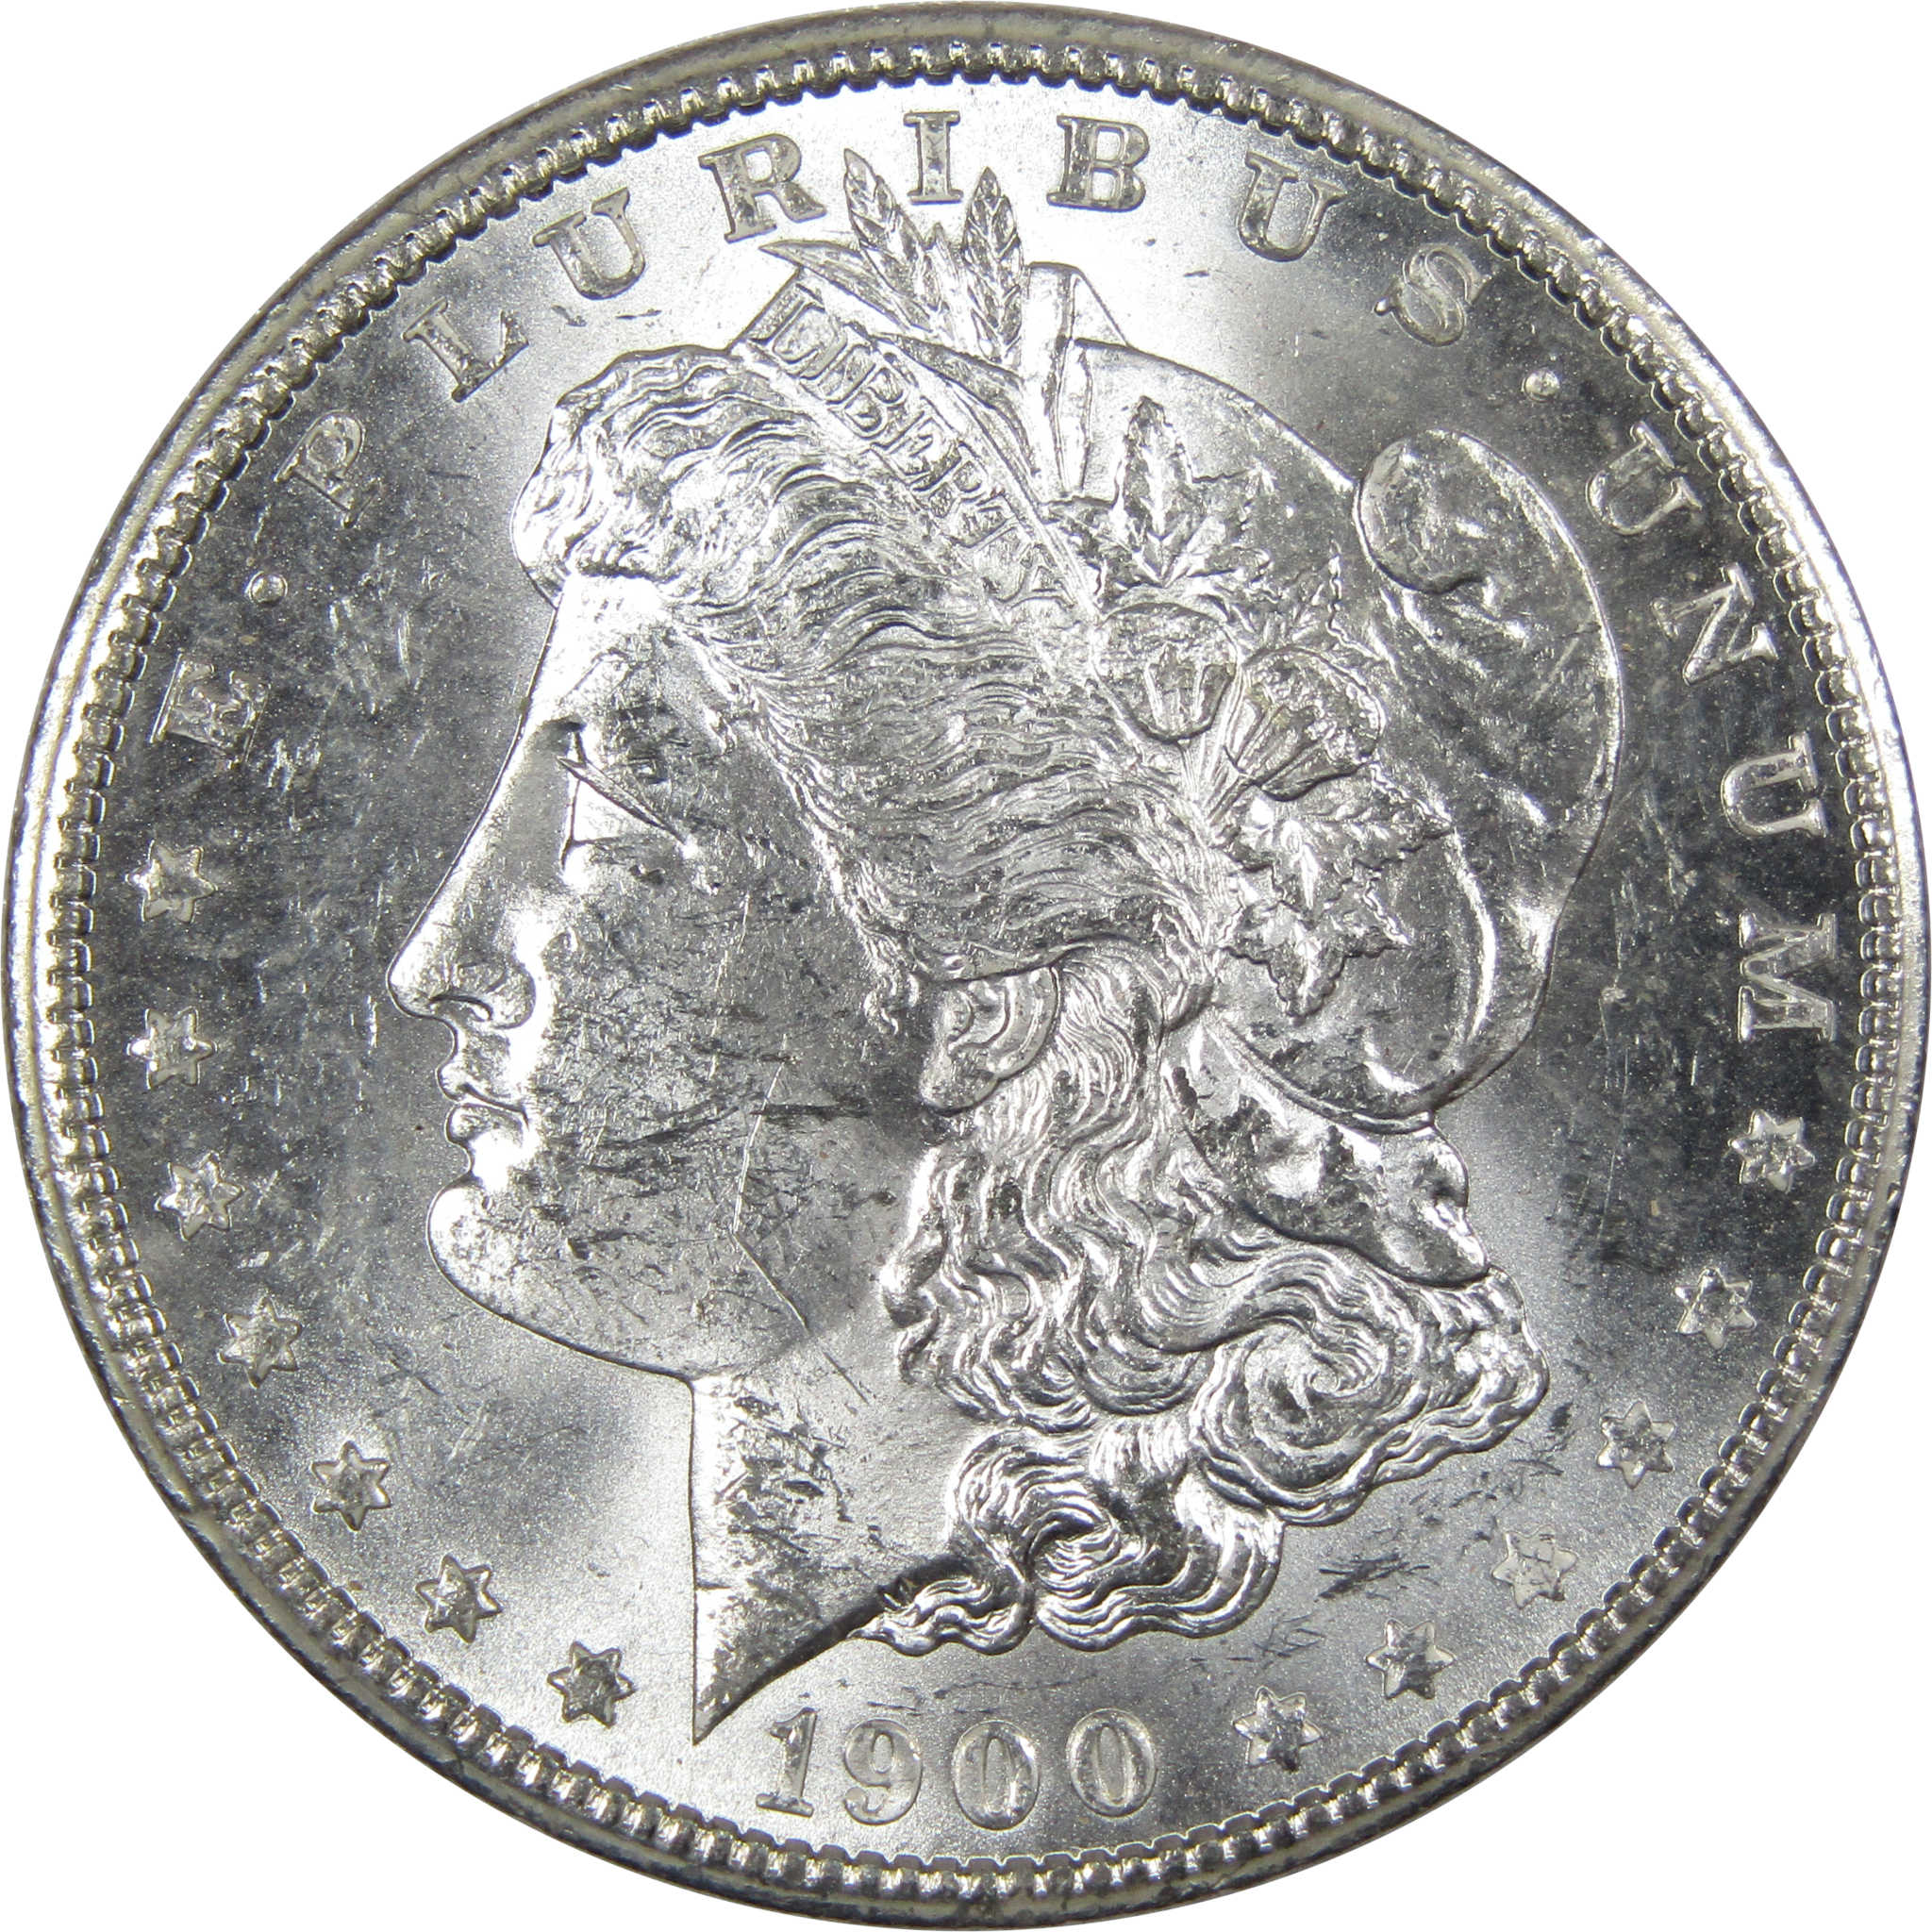 1900 O Morgan Dollar BU Uncirculated Mint State 90% Silver SKU:IPC9738 - Morgan coin - Morgan silver dollar - Morgan silver dollar for sale - Profile Coins &amp; Collectibles